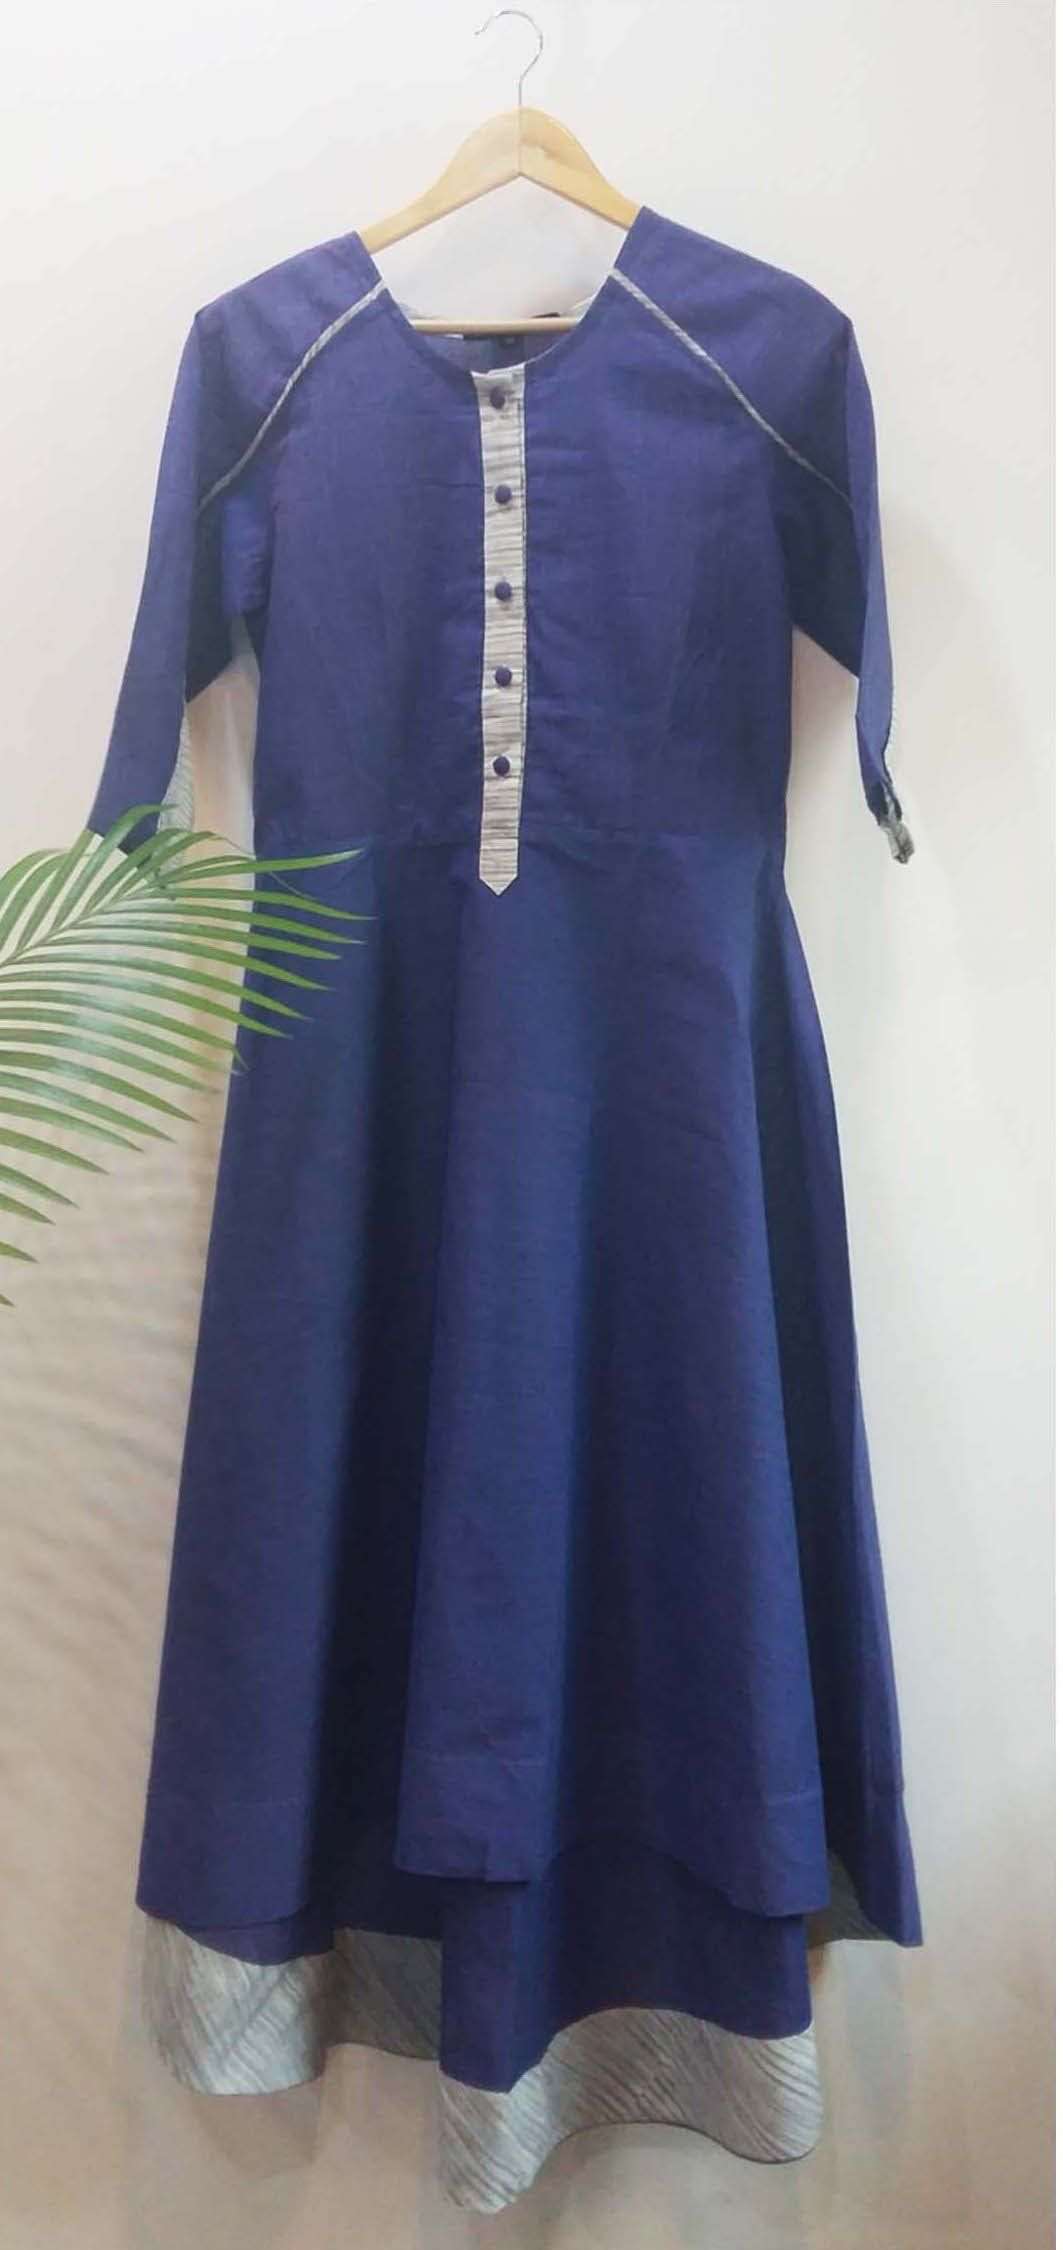 Blue high low long dress Dress The Neem Tree Sonal Kabra Buy Shop online premium luxury fashion clothing natural fabrics sustainable organic hand made handcrafted artisans craftsmen